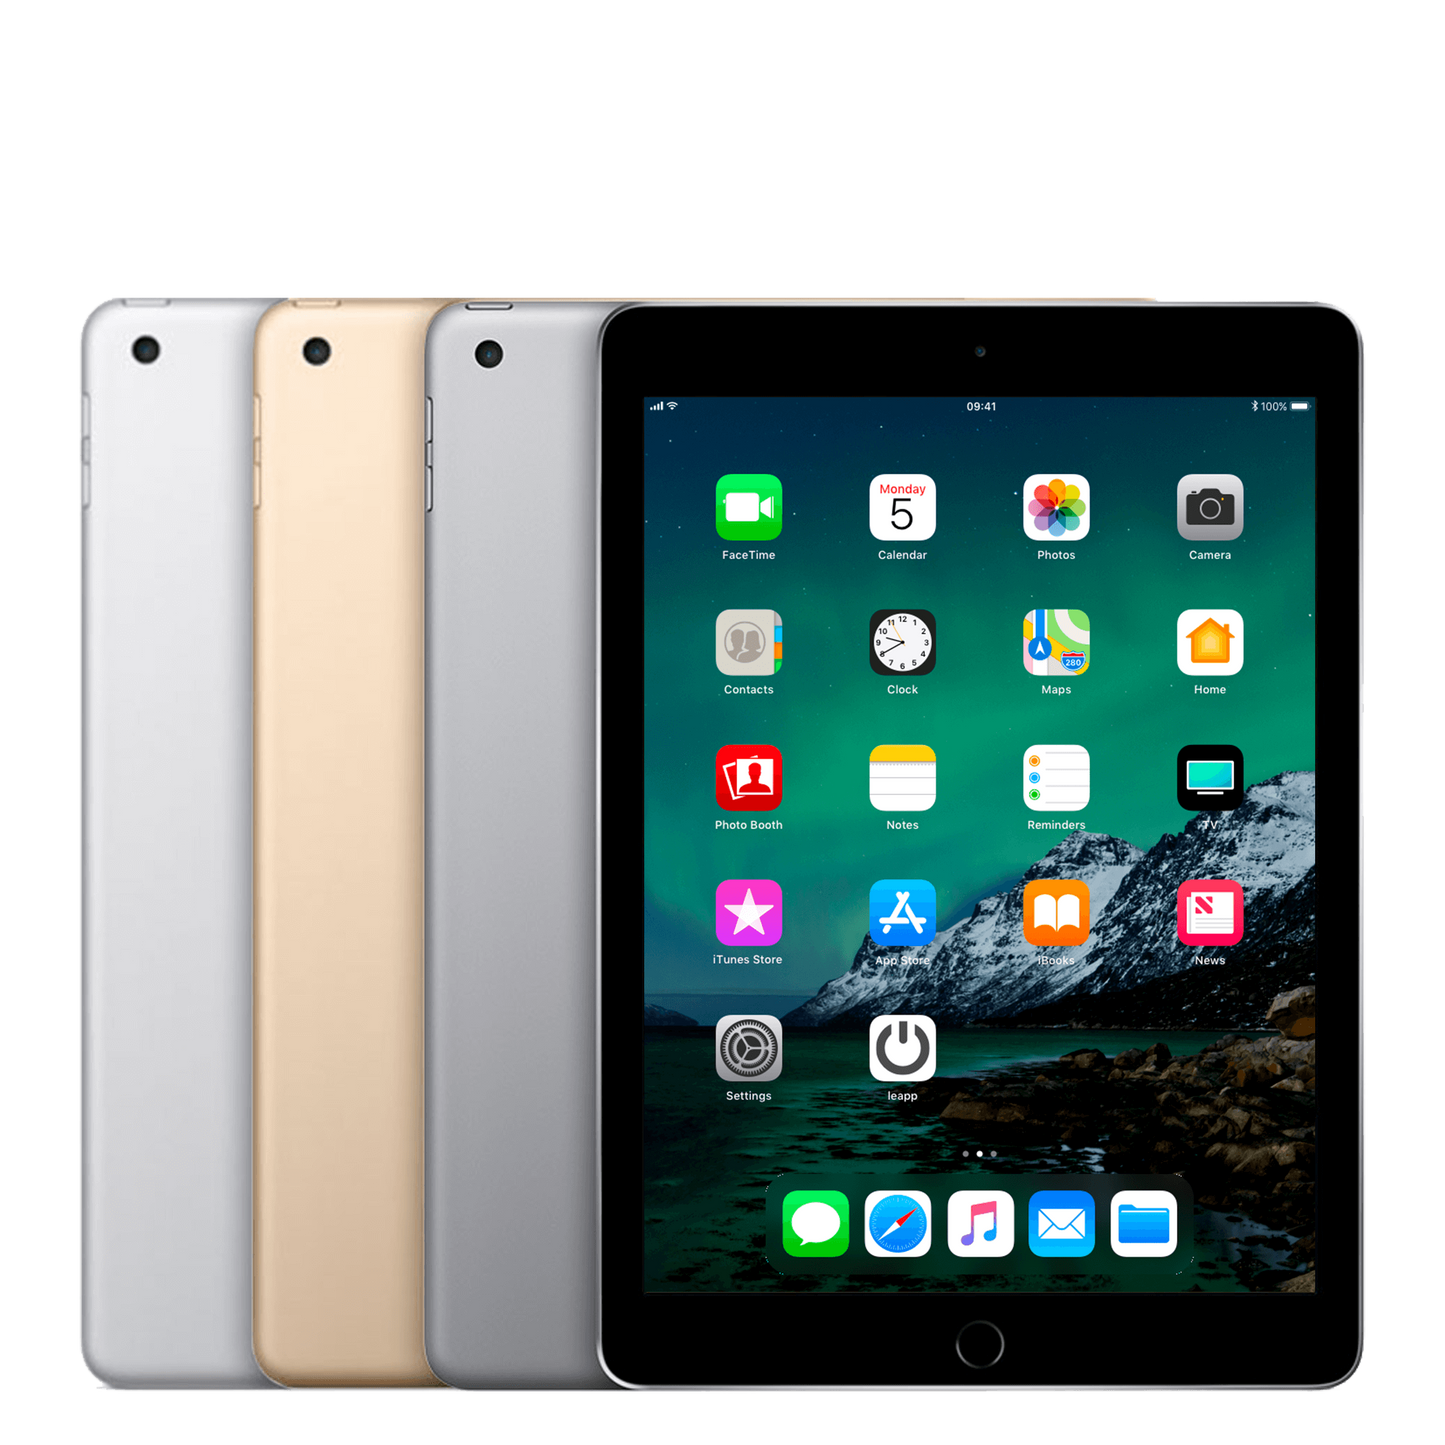 Refurbished iPad 2017 4g 128gb - test-product-media-liquid1